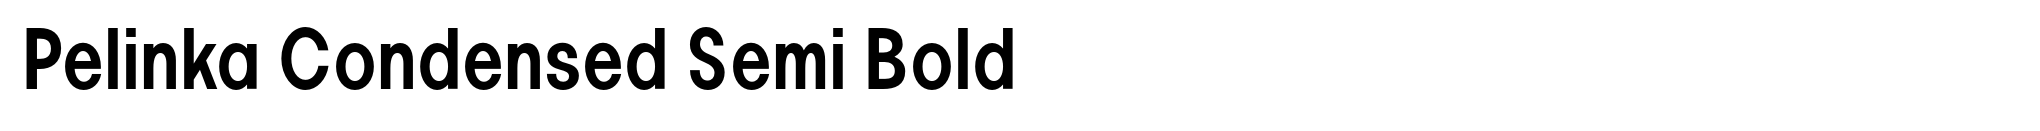 Pelinka Condensed Semi Bold image